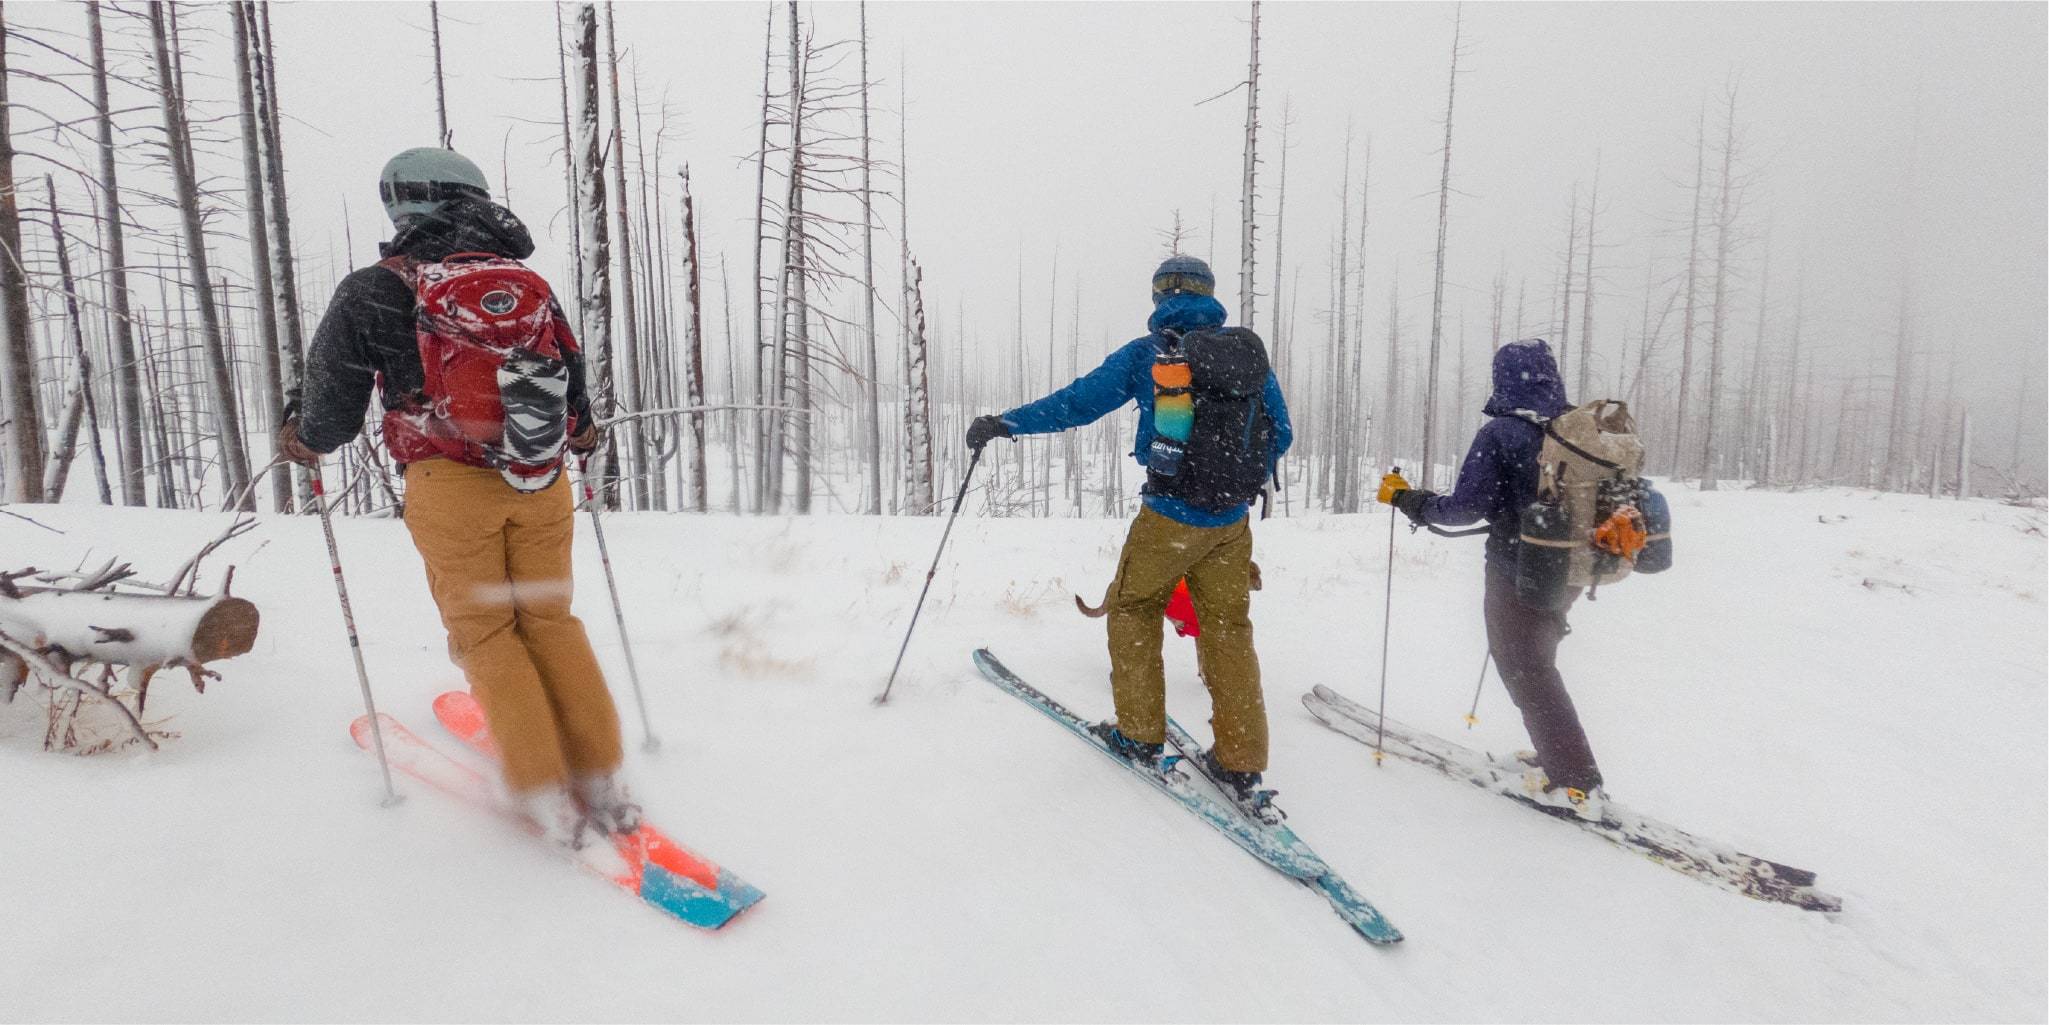 Three skiers in Mt. Hood with backpacks and Rumpl blankets